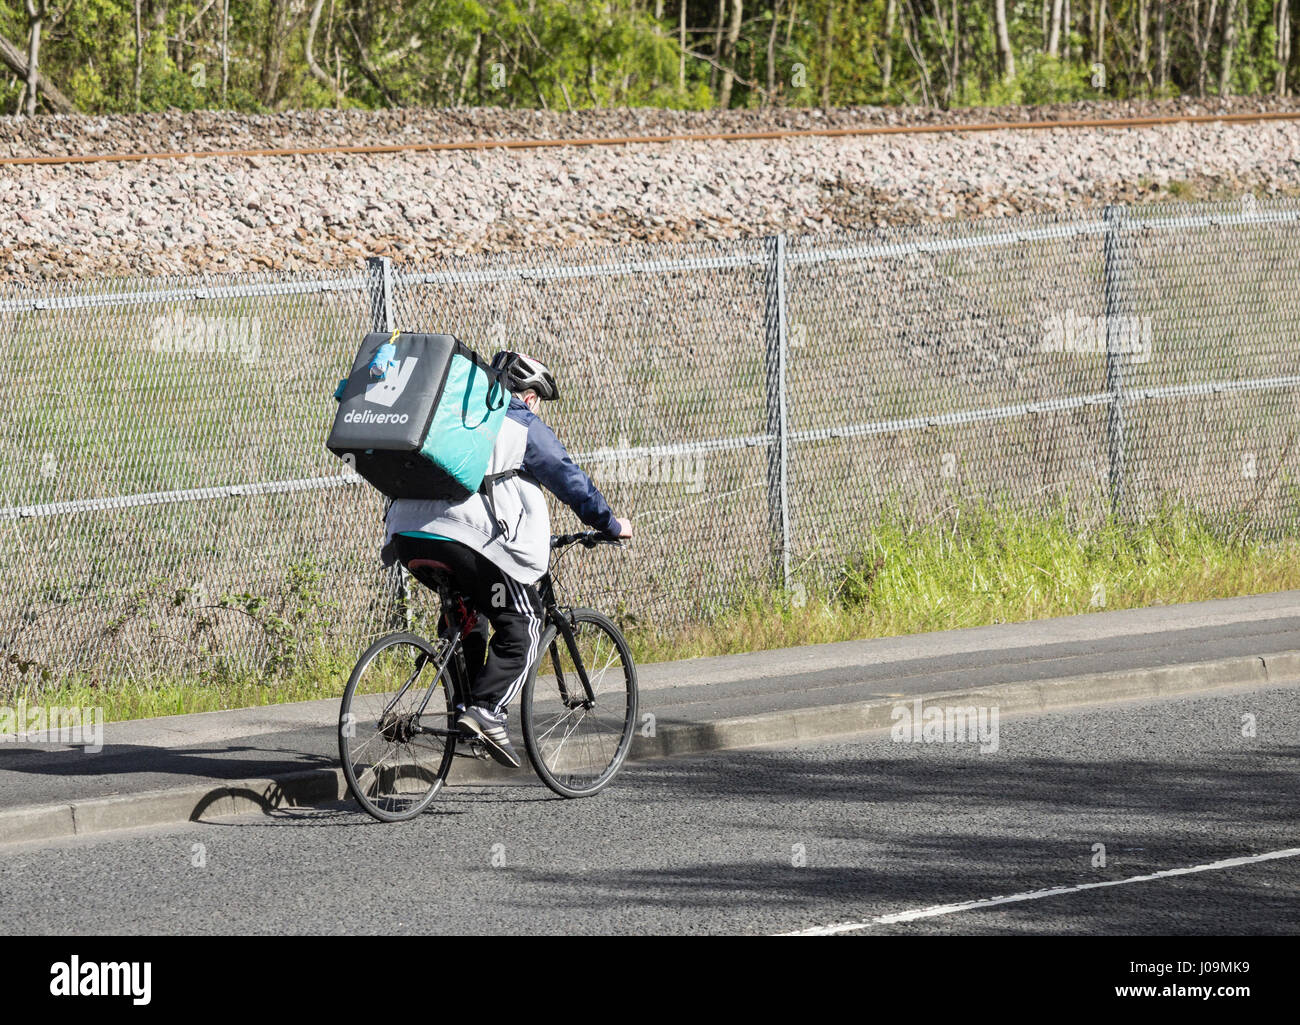 Deliveroo rider. UK Stock Photo